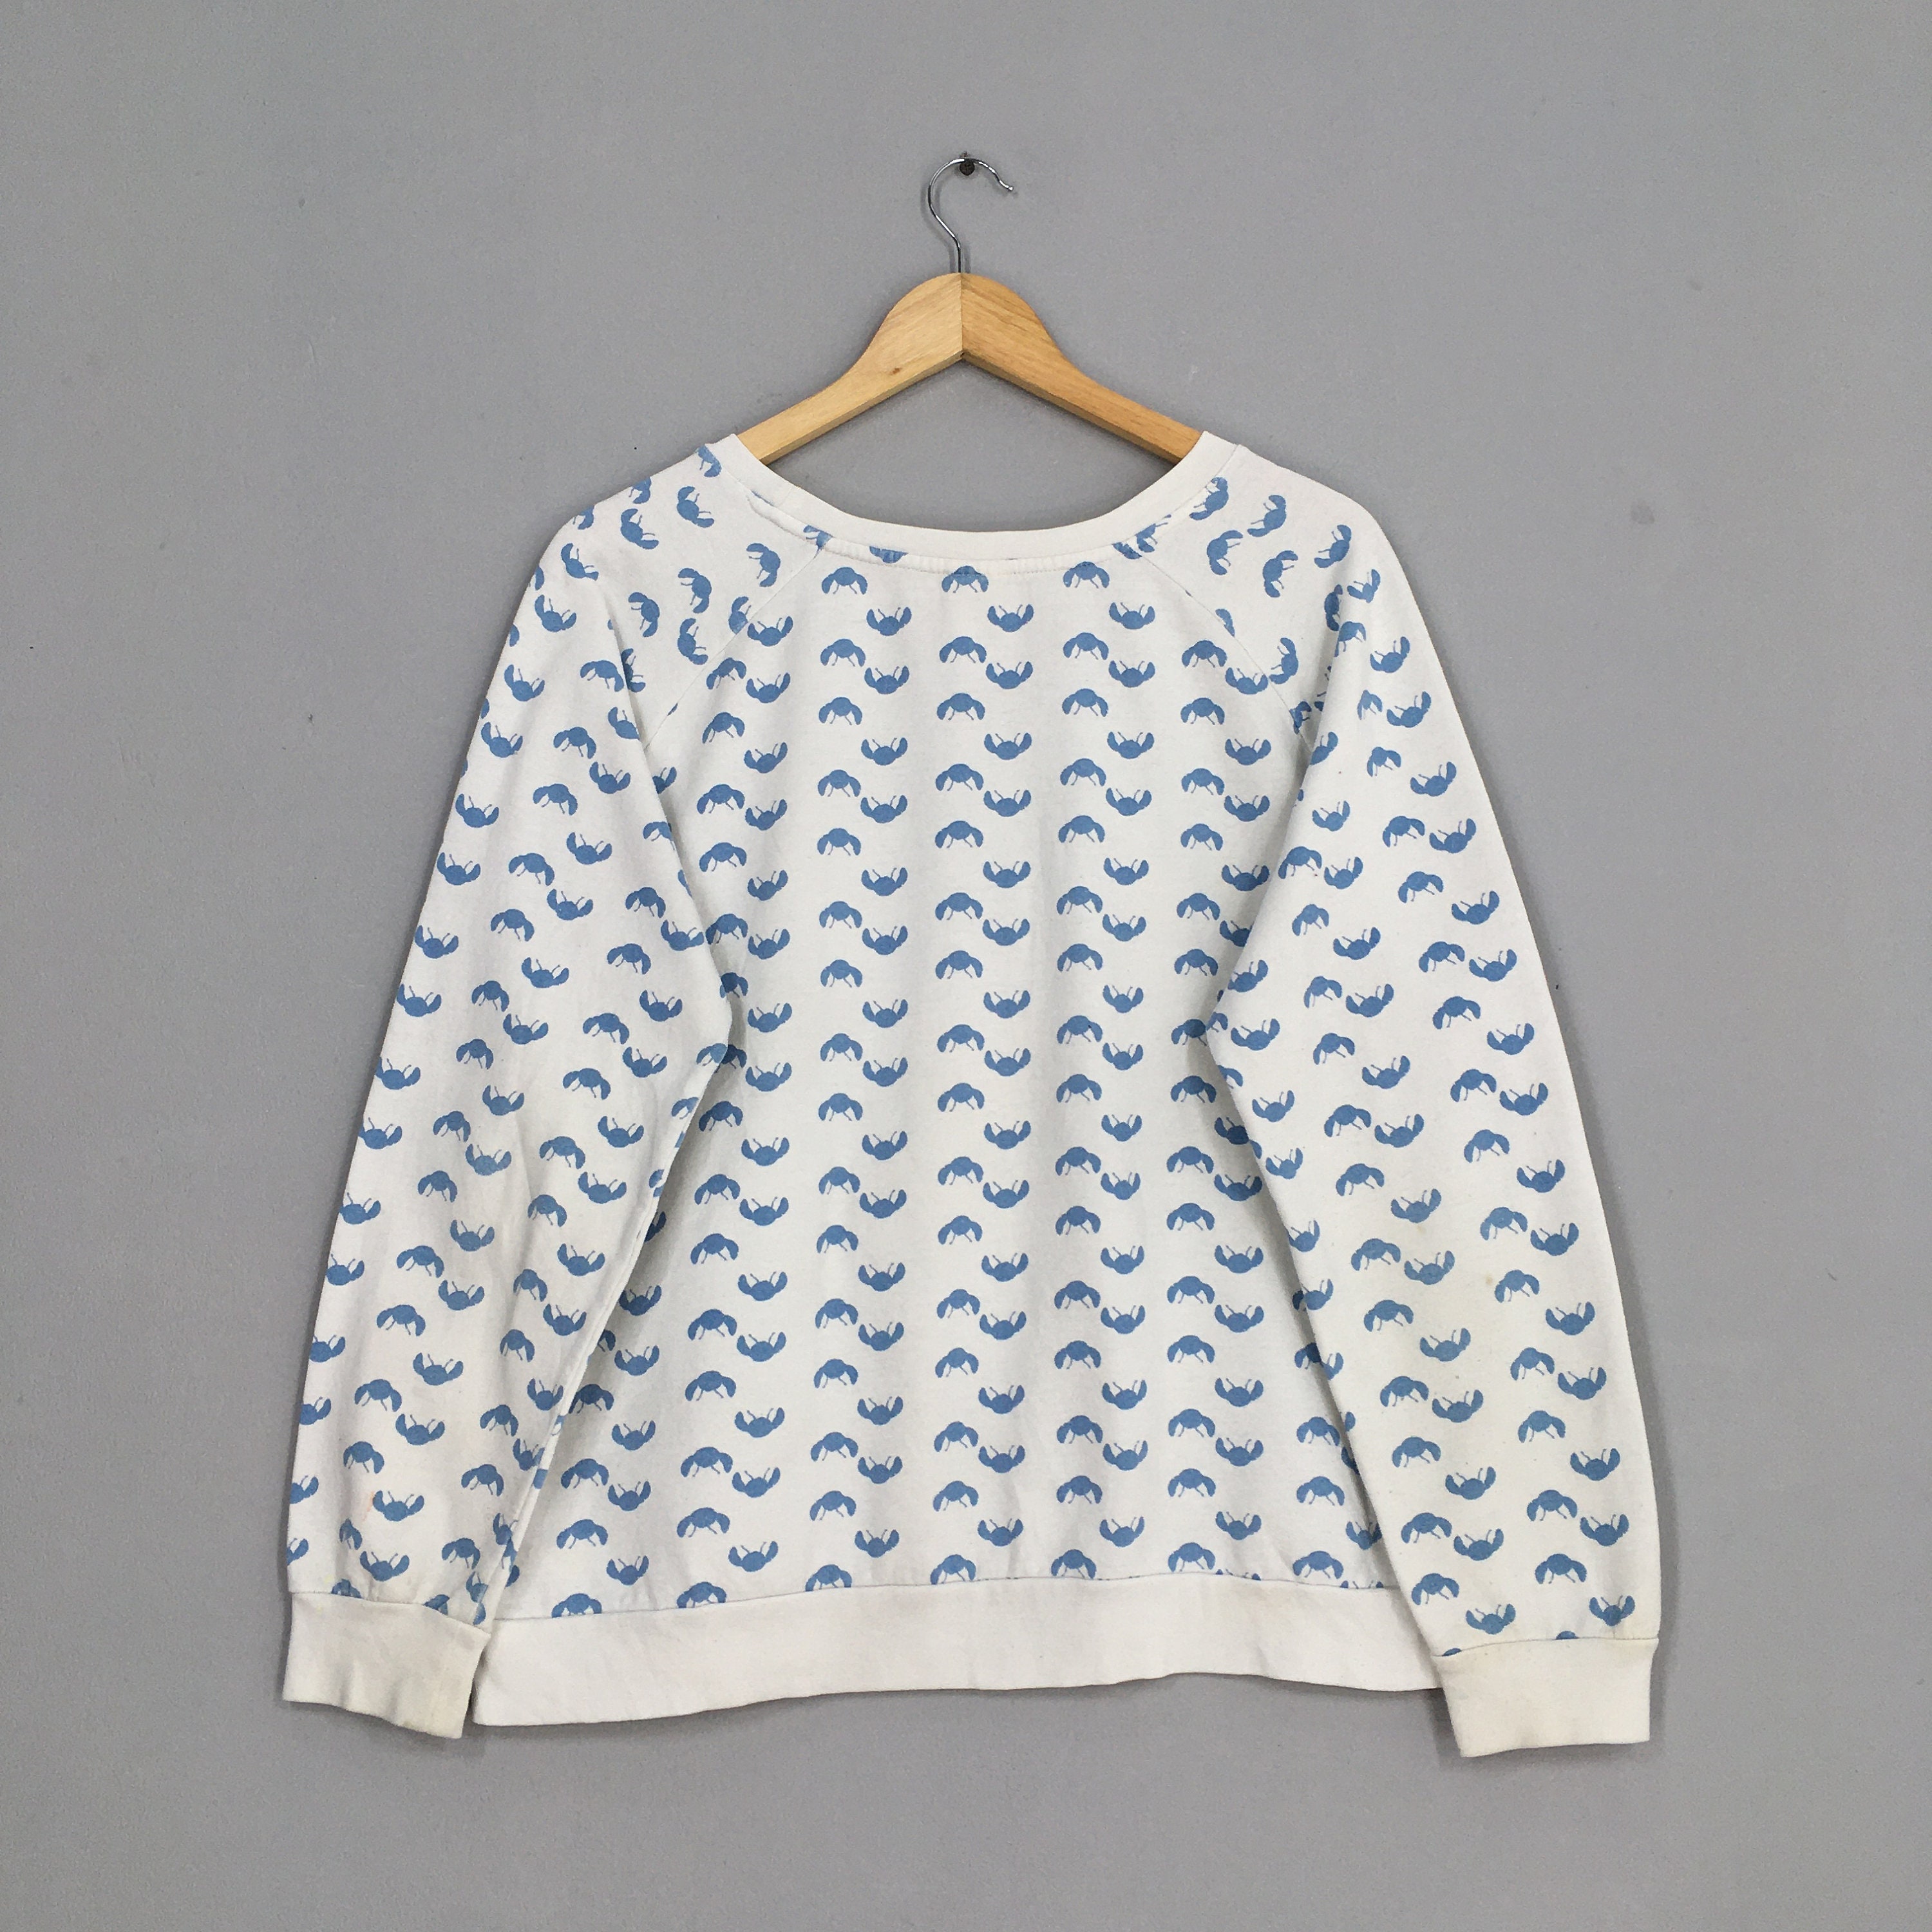 DISNEY - Lilo & Stitch - Sweat-Shirt Oversize Femme (XL